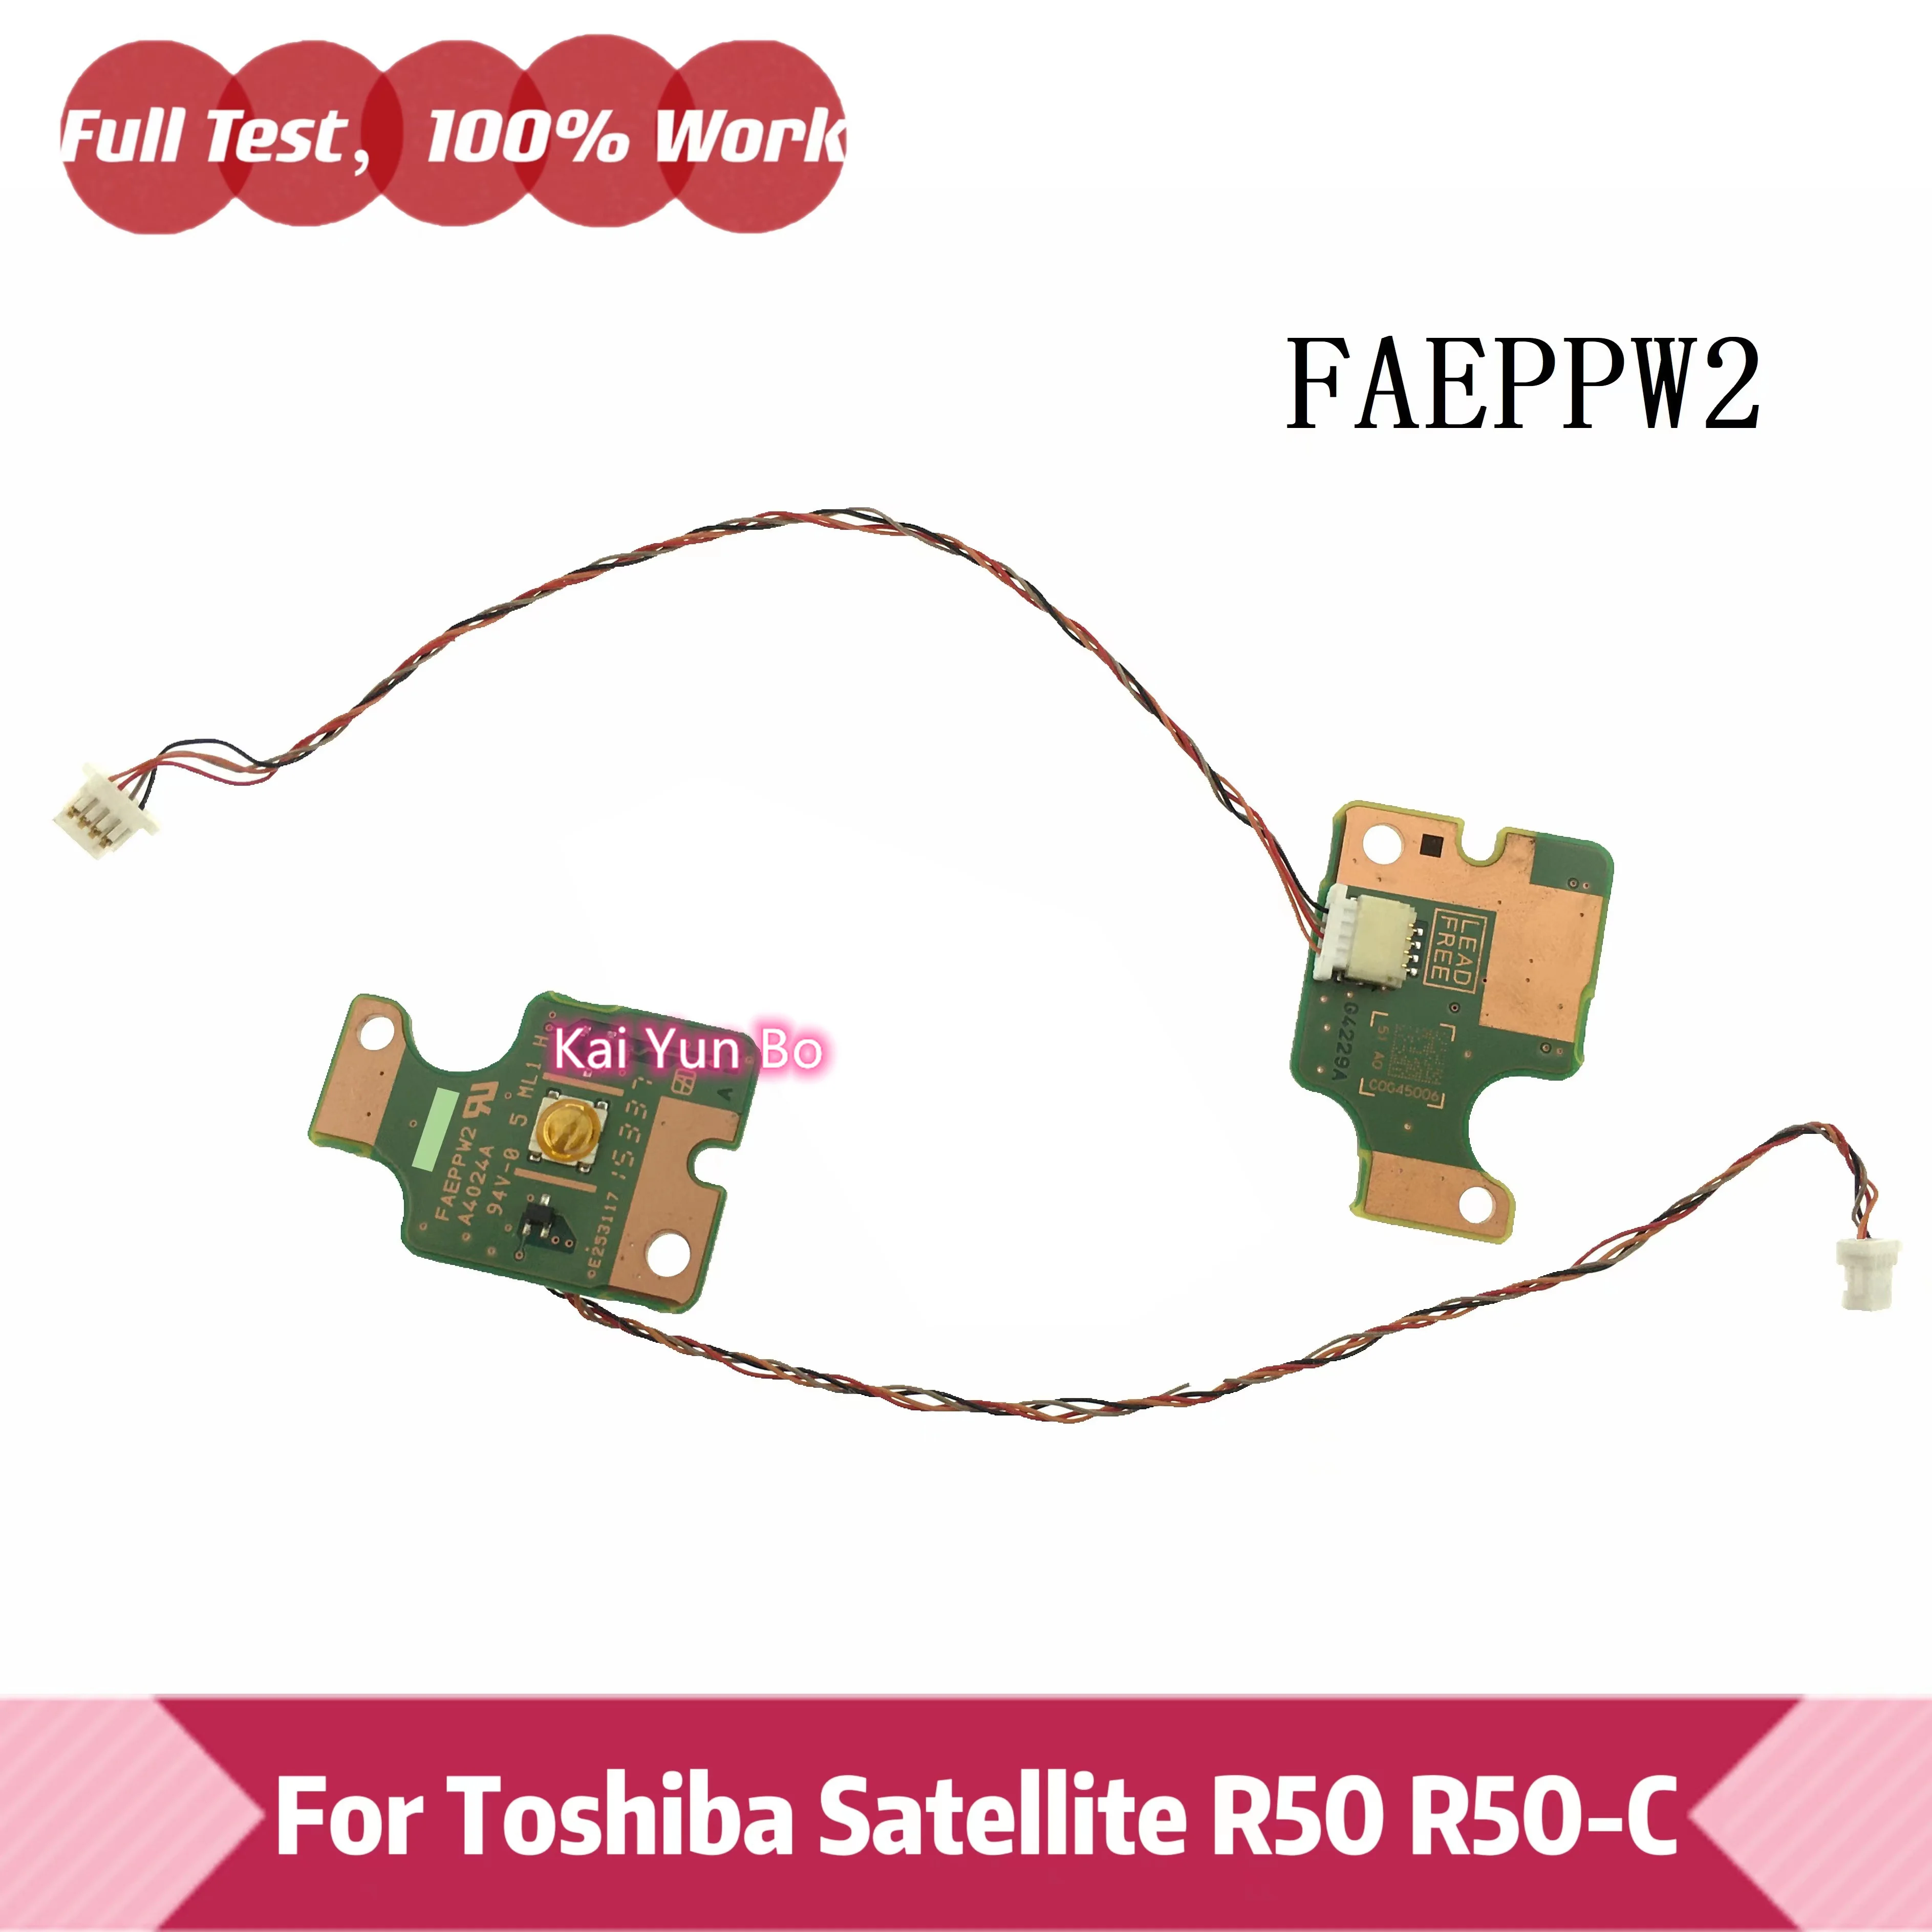 

Плата кнопки питания ноутбука Toshiba Satellite R50 R50-C ON OFF FAEPPW2 A4024A с кабелем 100% Тест OK